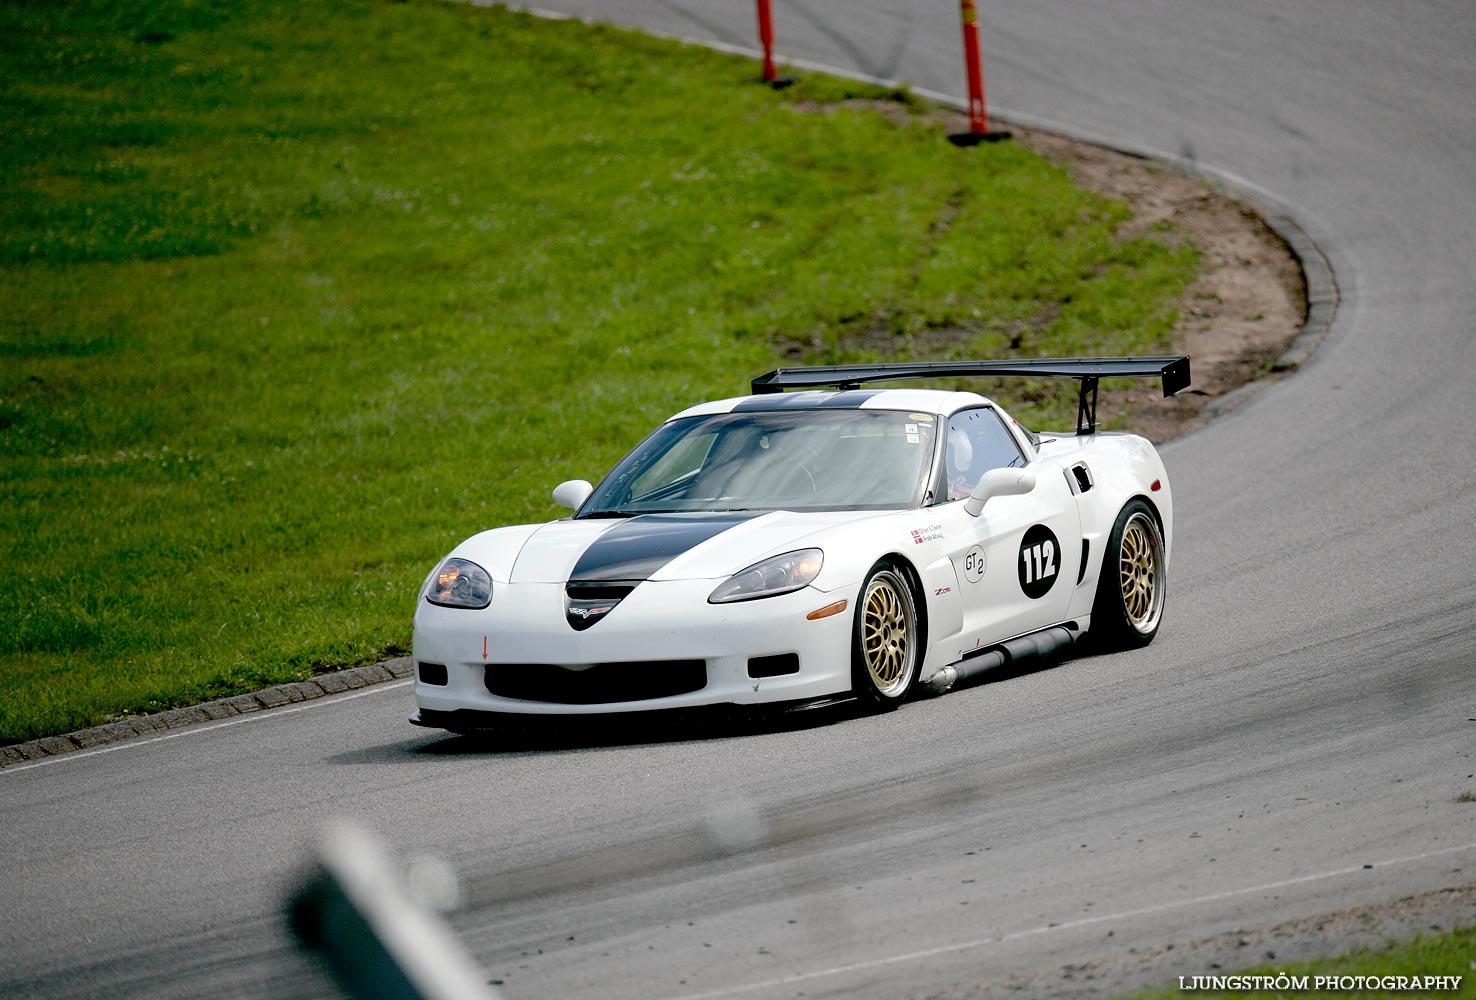 SSK Raceweek,mix,Kinnekulle Ring,Götene,Sverige,Motorsport,,2009,107504